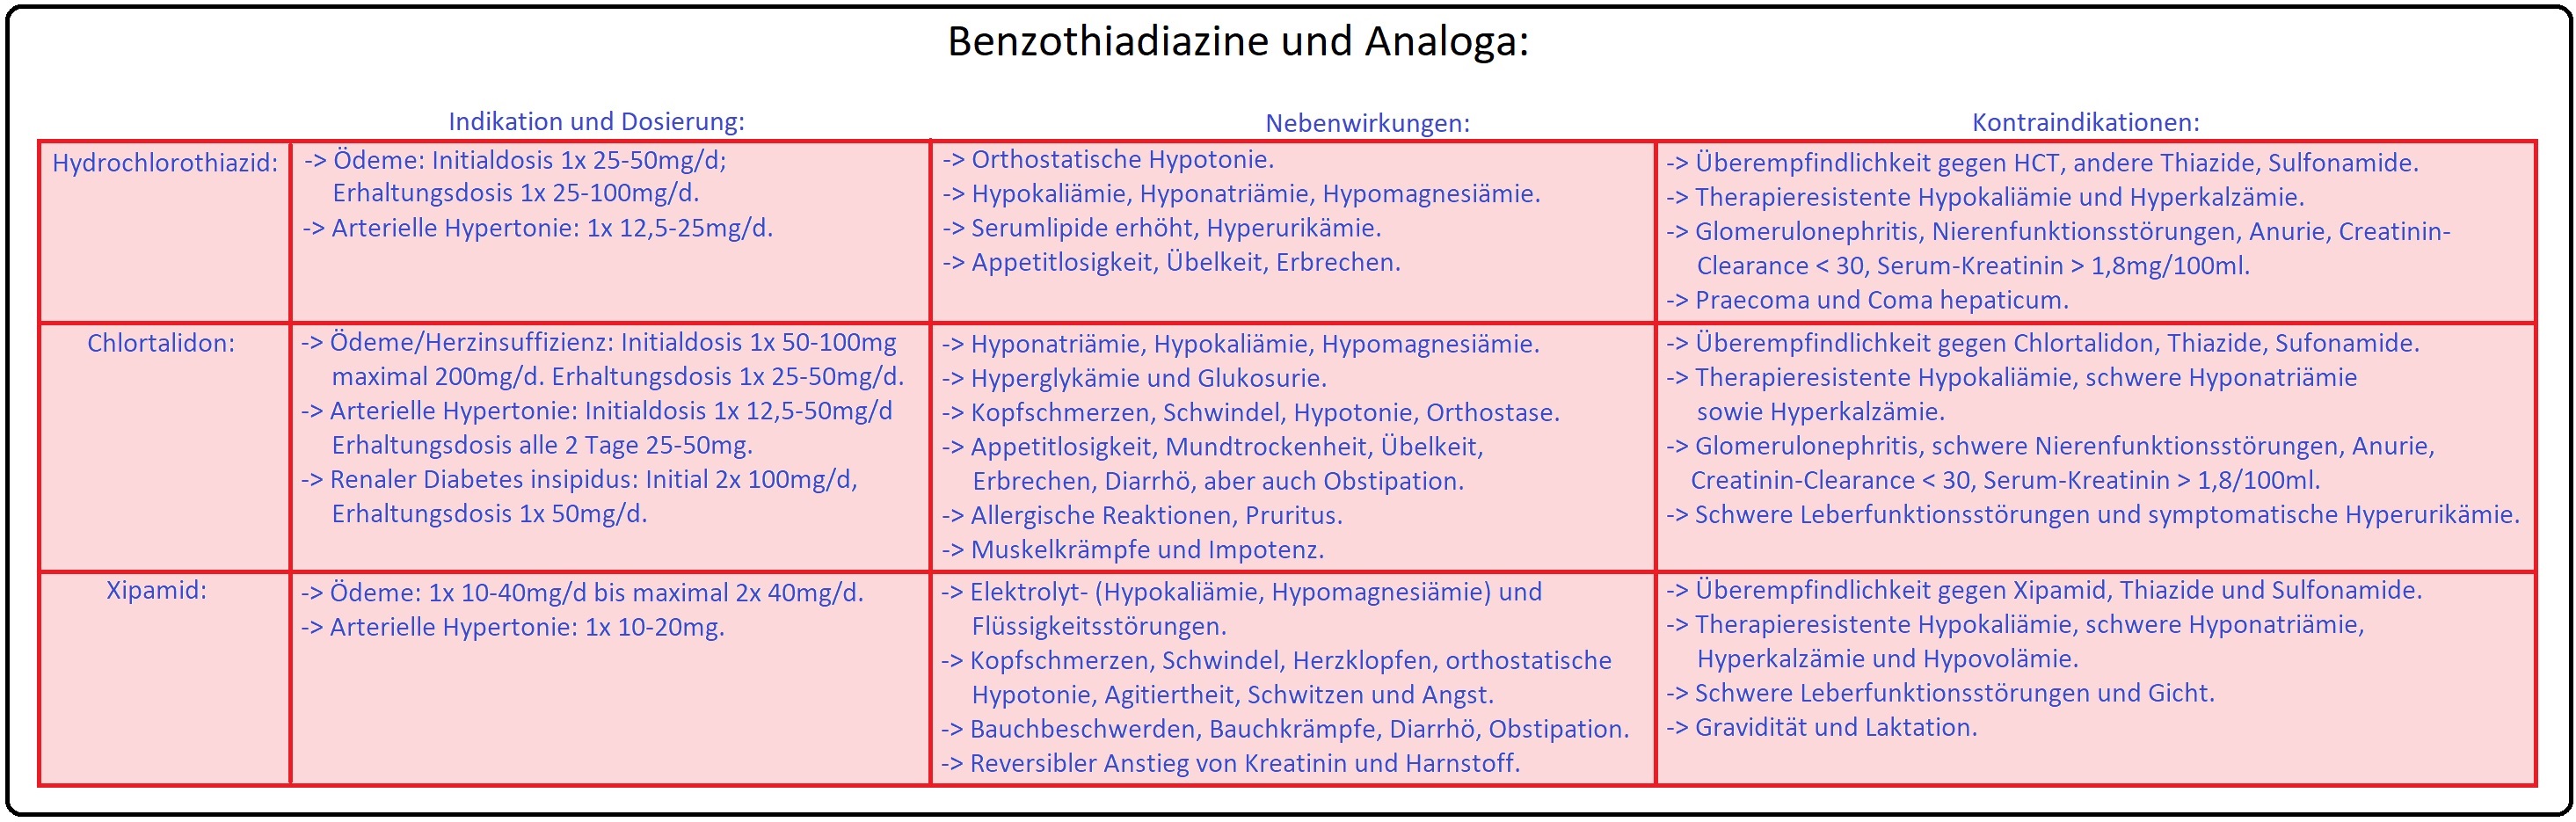 145 Benzothiadiazine und Analoga